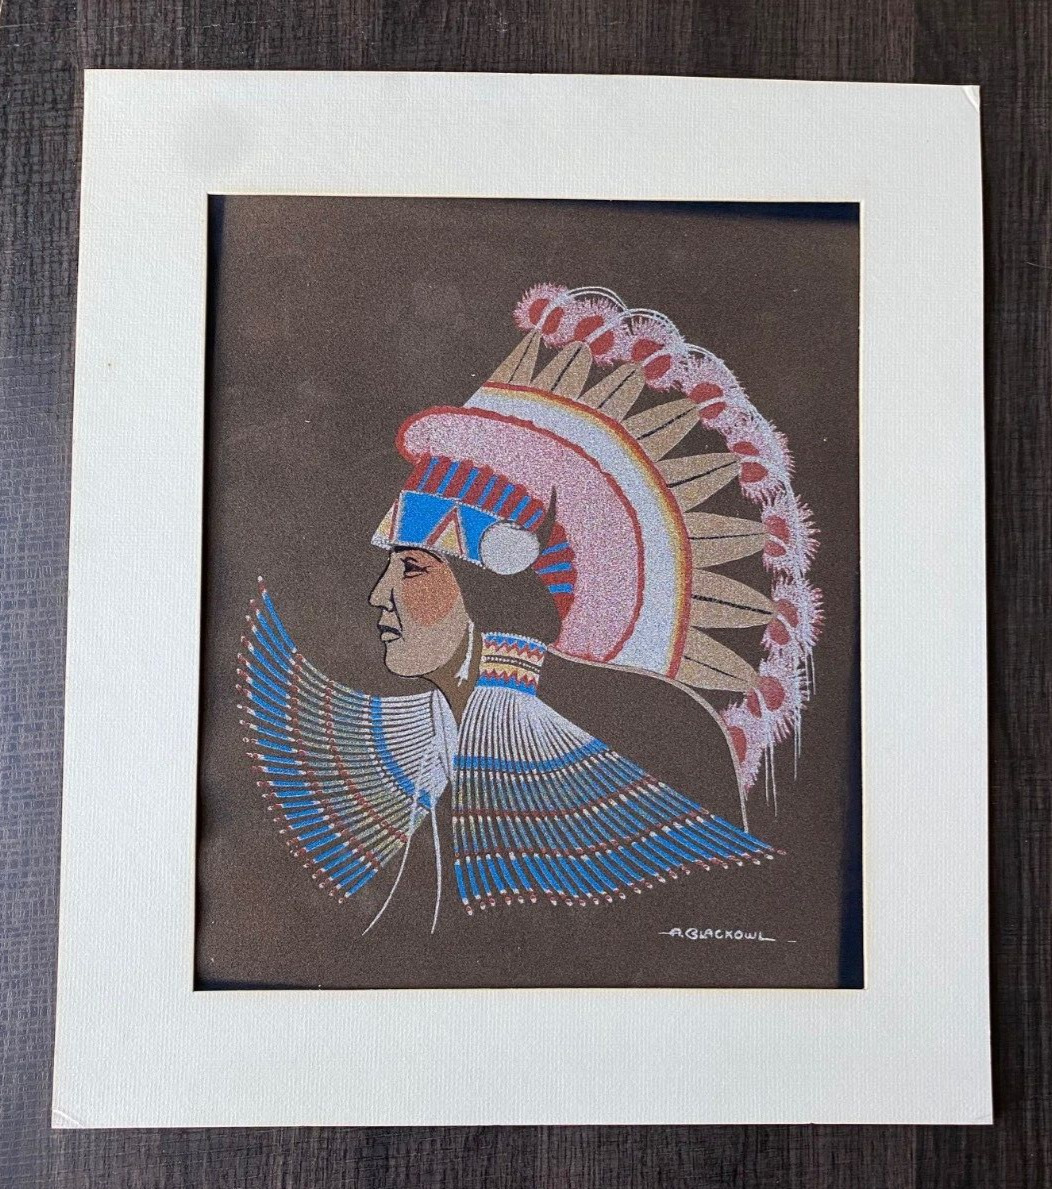 ARCHIE BLACKOWL CHEYENNE Silkscreen Native American Profile #2 - VGUC